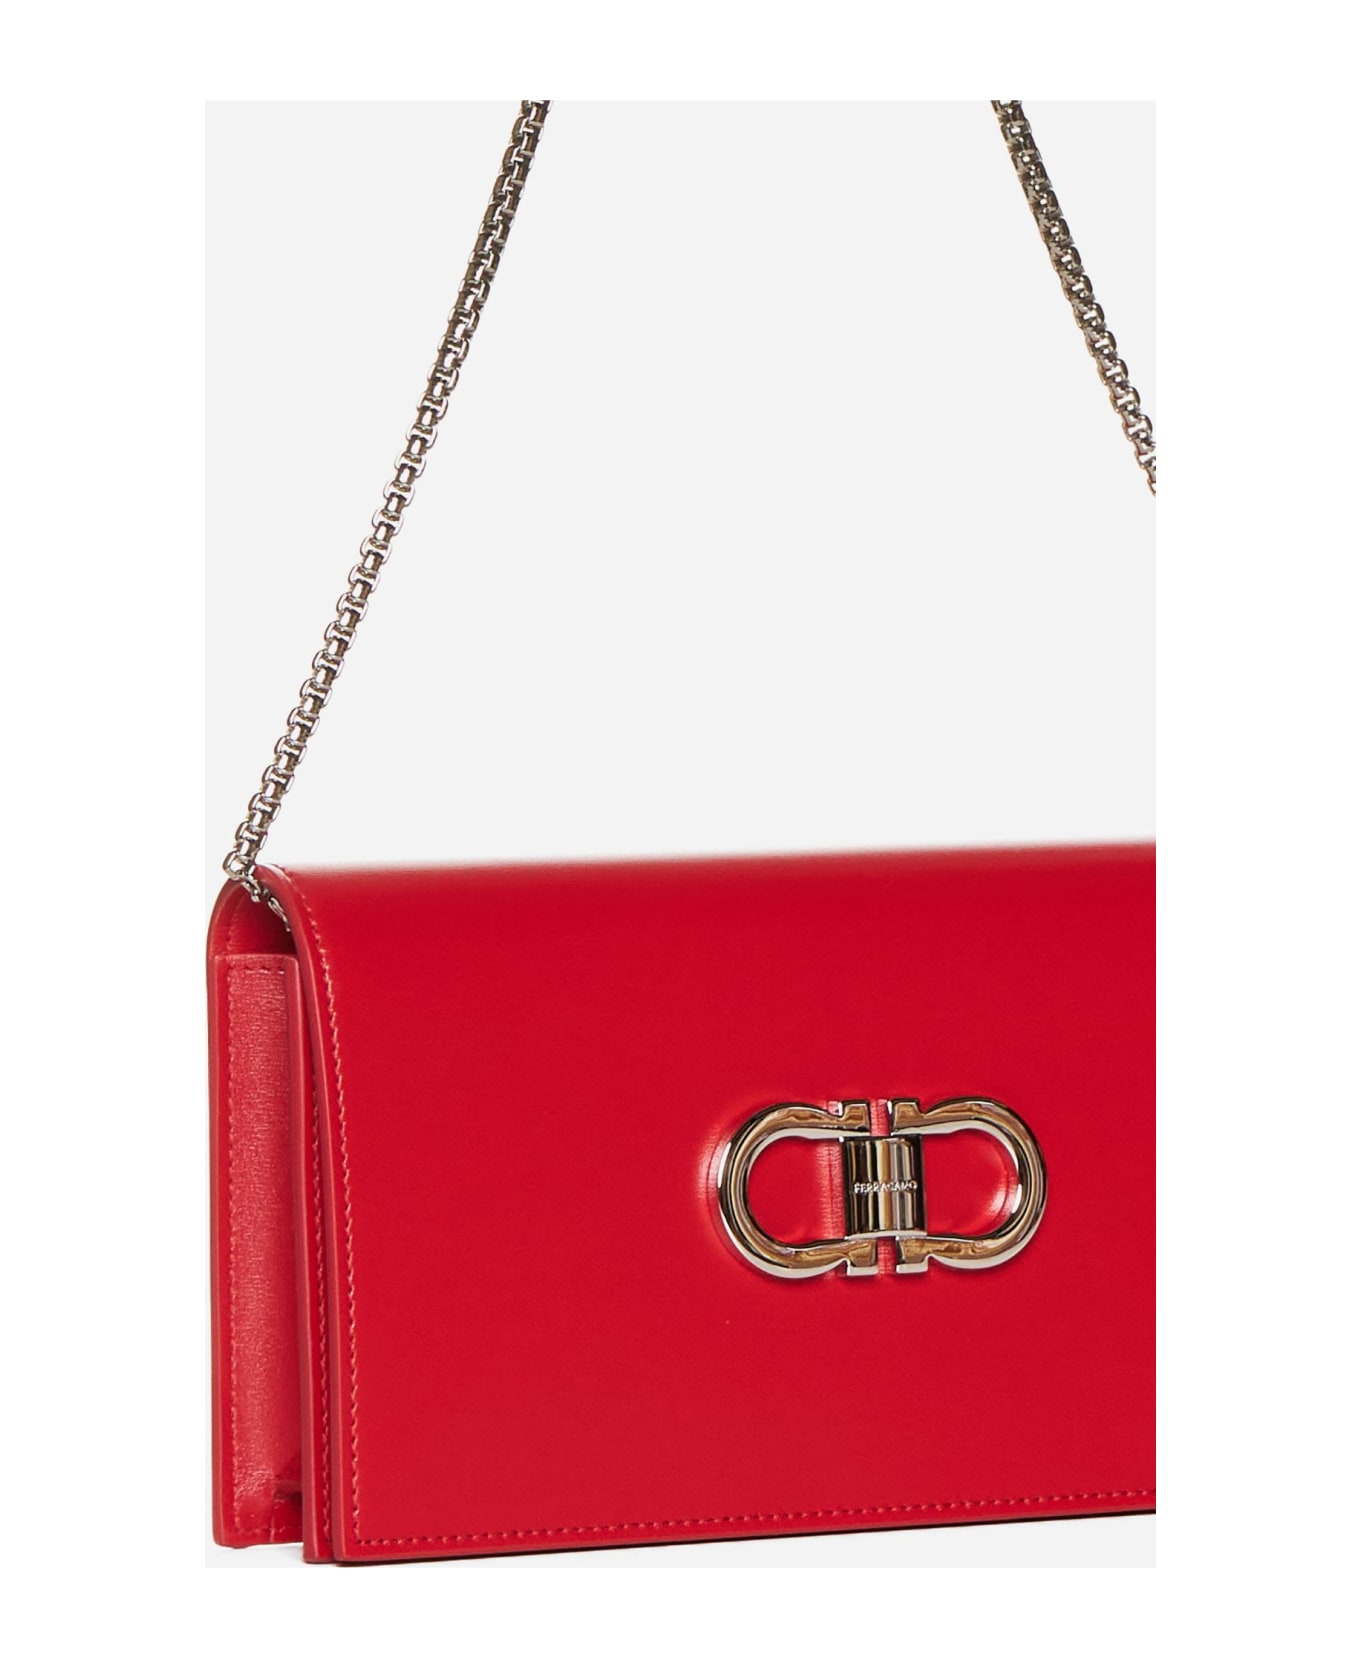 Ferragamo Gancini Leather Mini Bag - Flame red || flame red